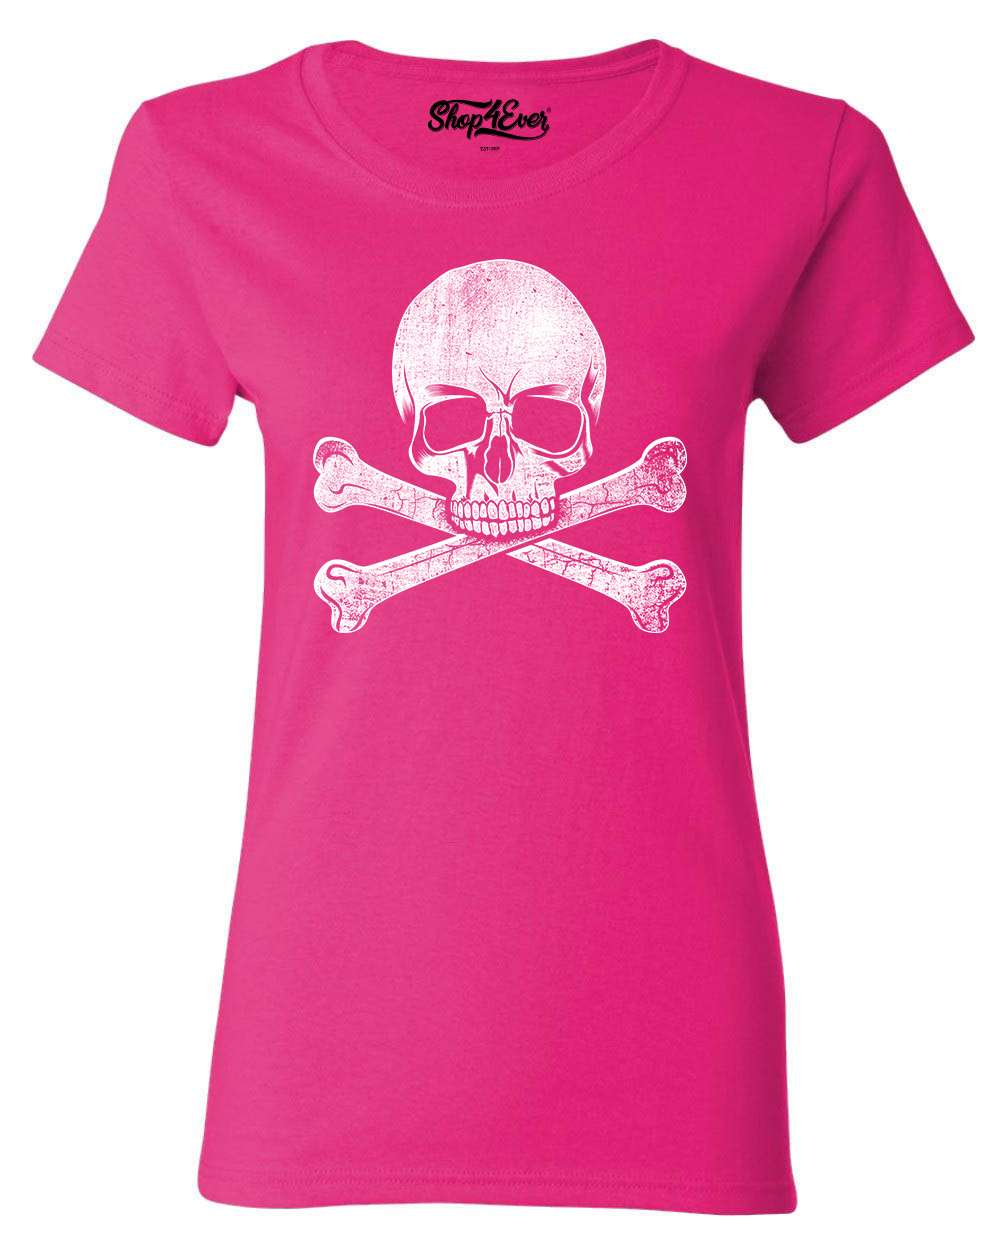 Guitar Effect Foot Pedal Pirate Skull Cross Bones Womens Tee Shirt 